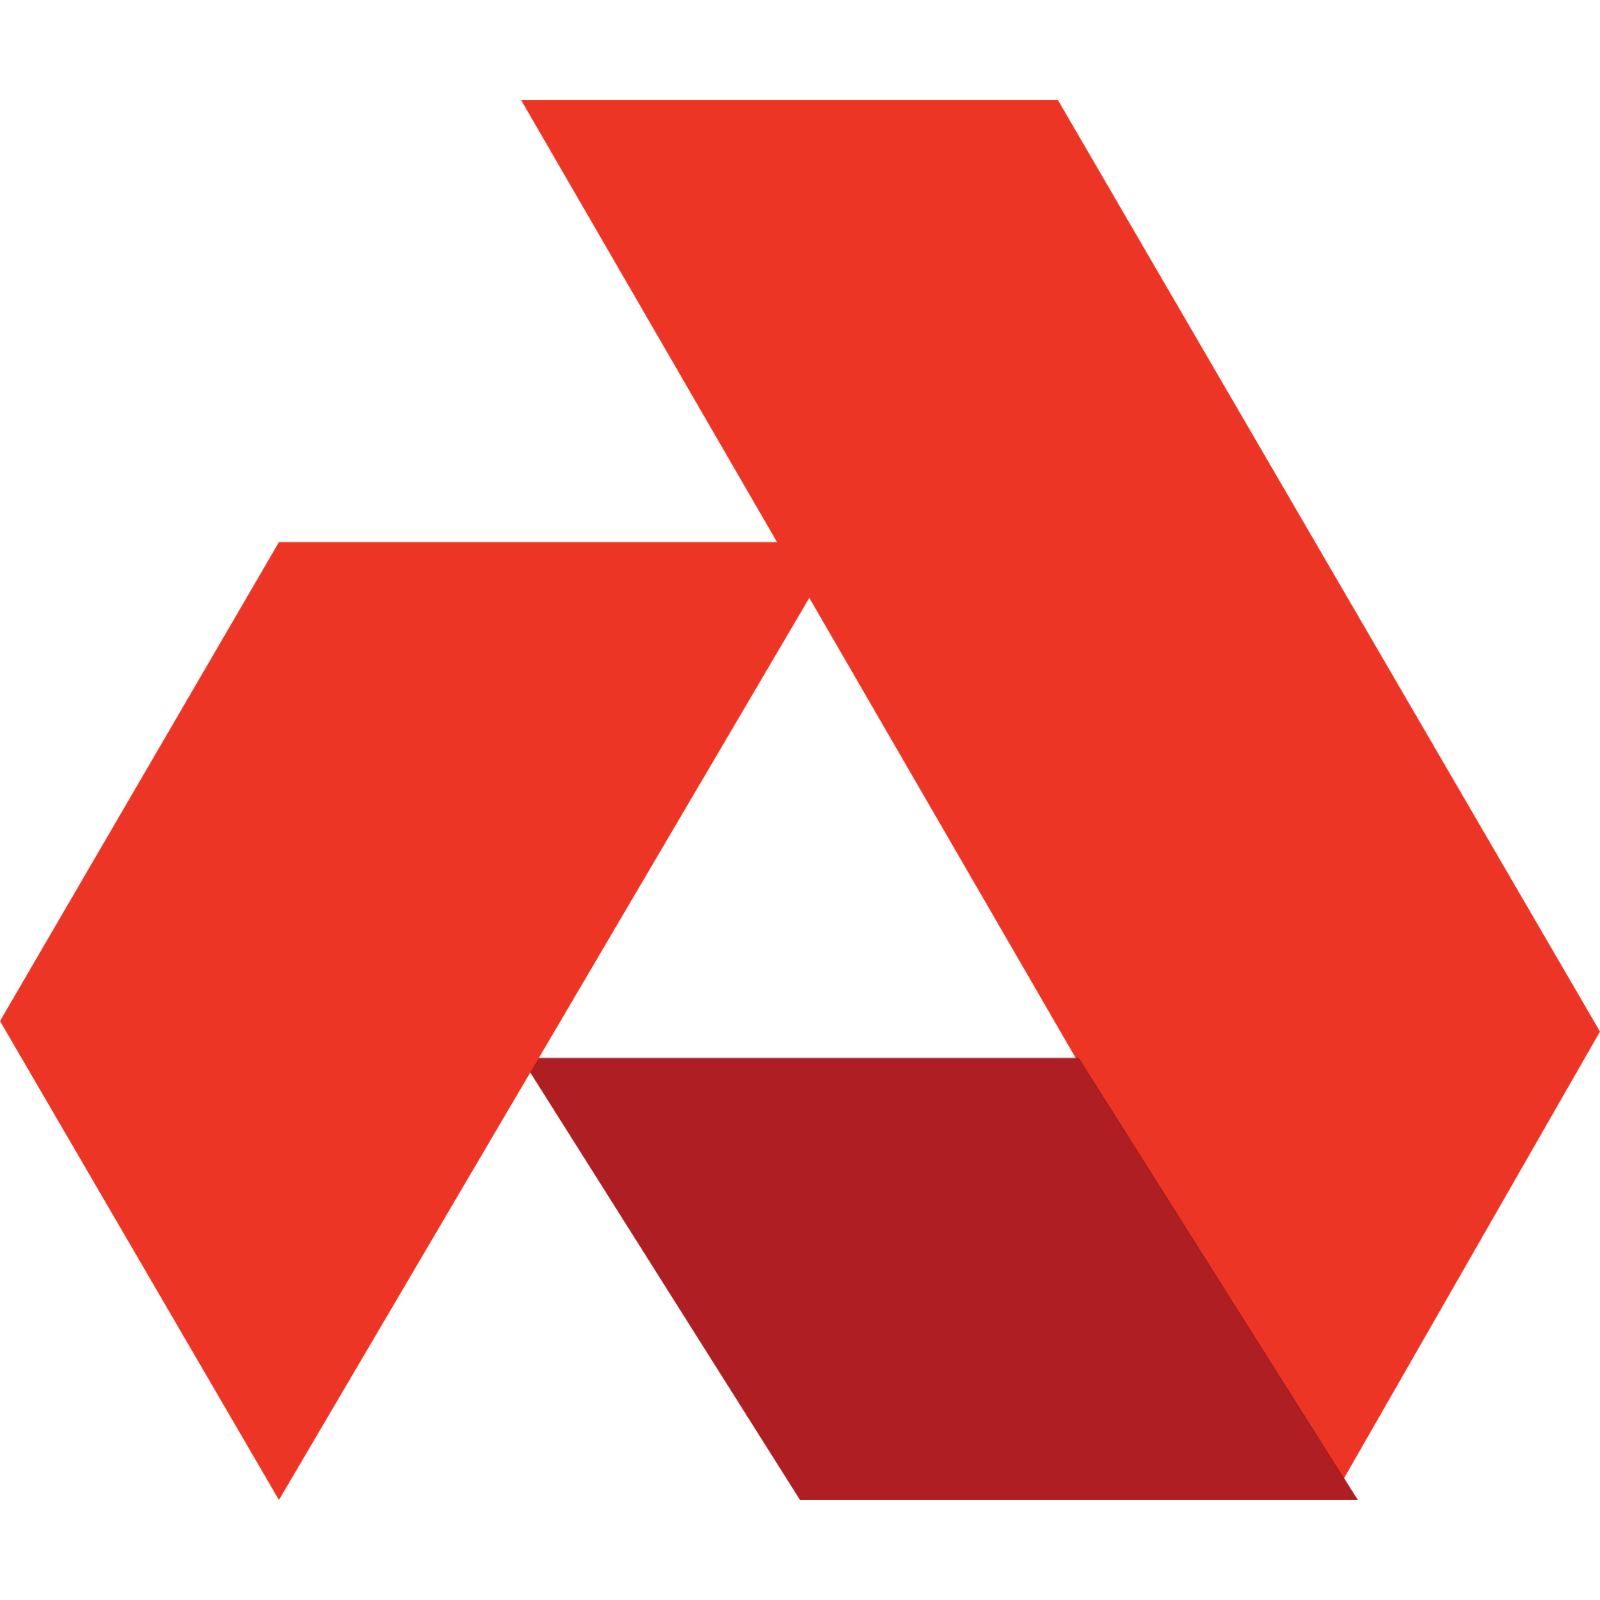 Akash Network Logo